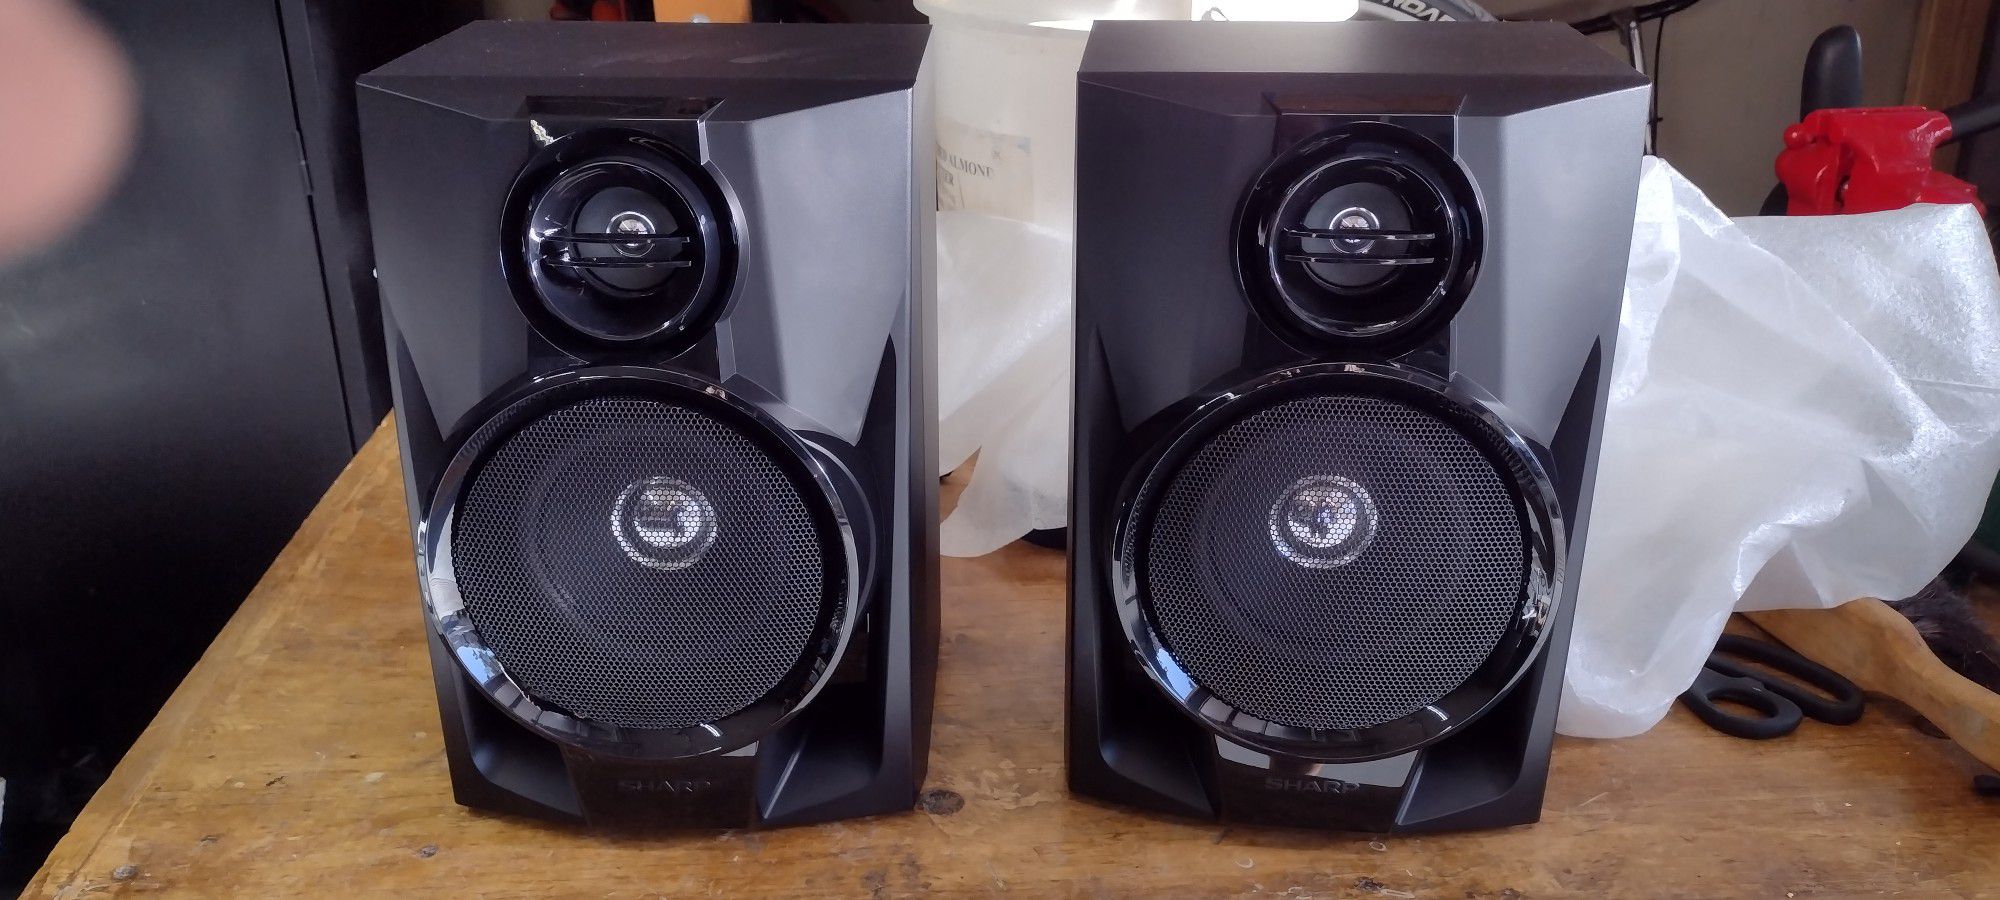 Sharp Bh950 Speakers (2 Speakers).